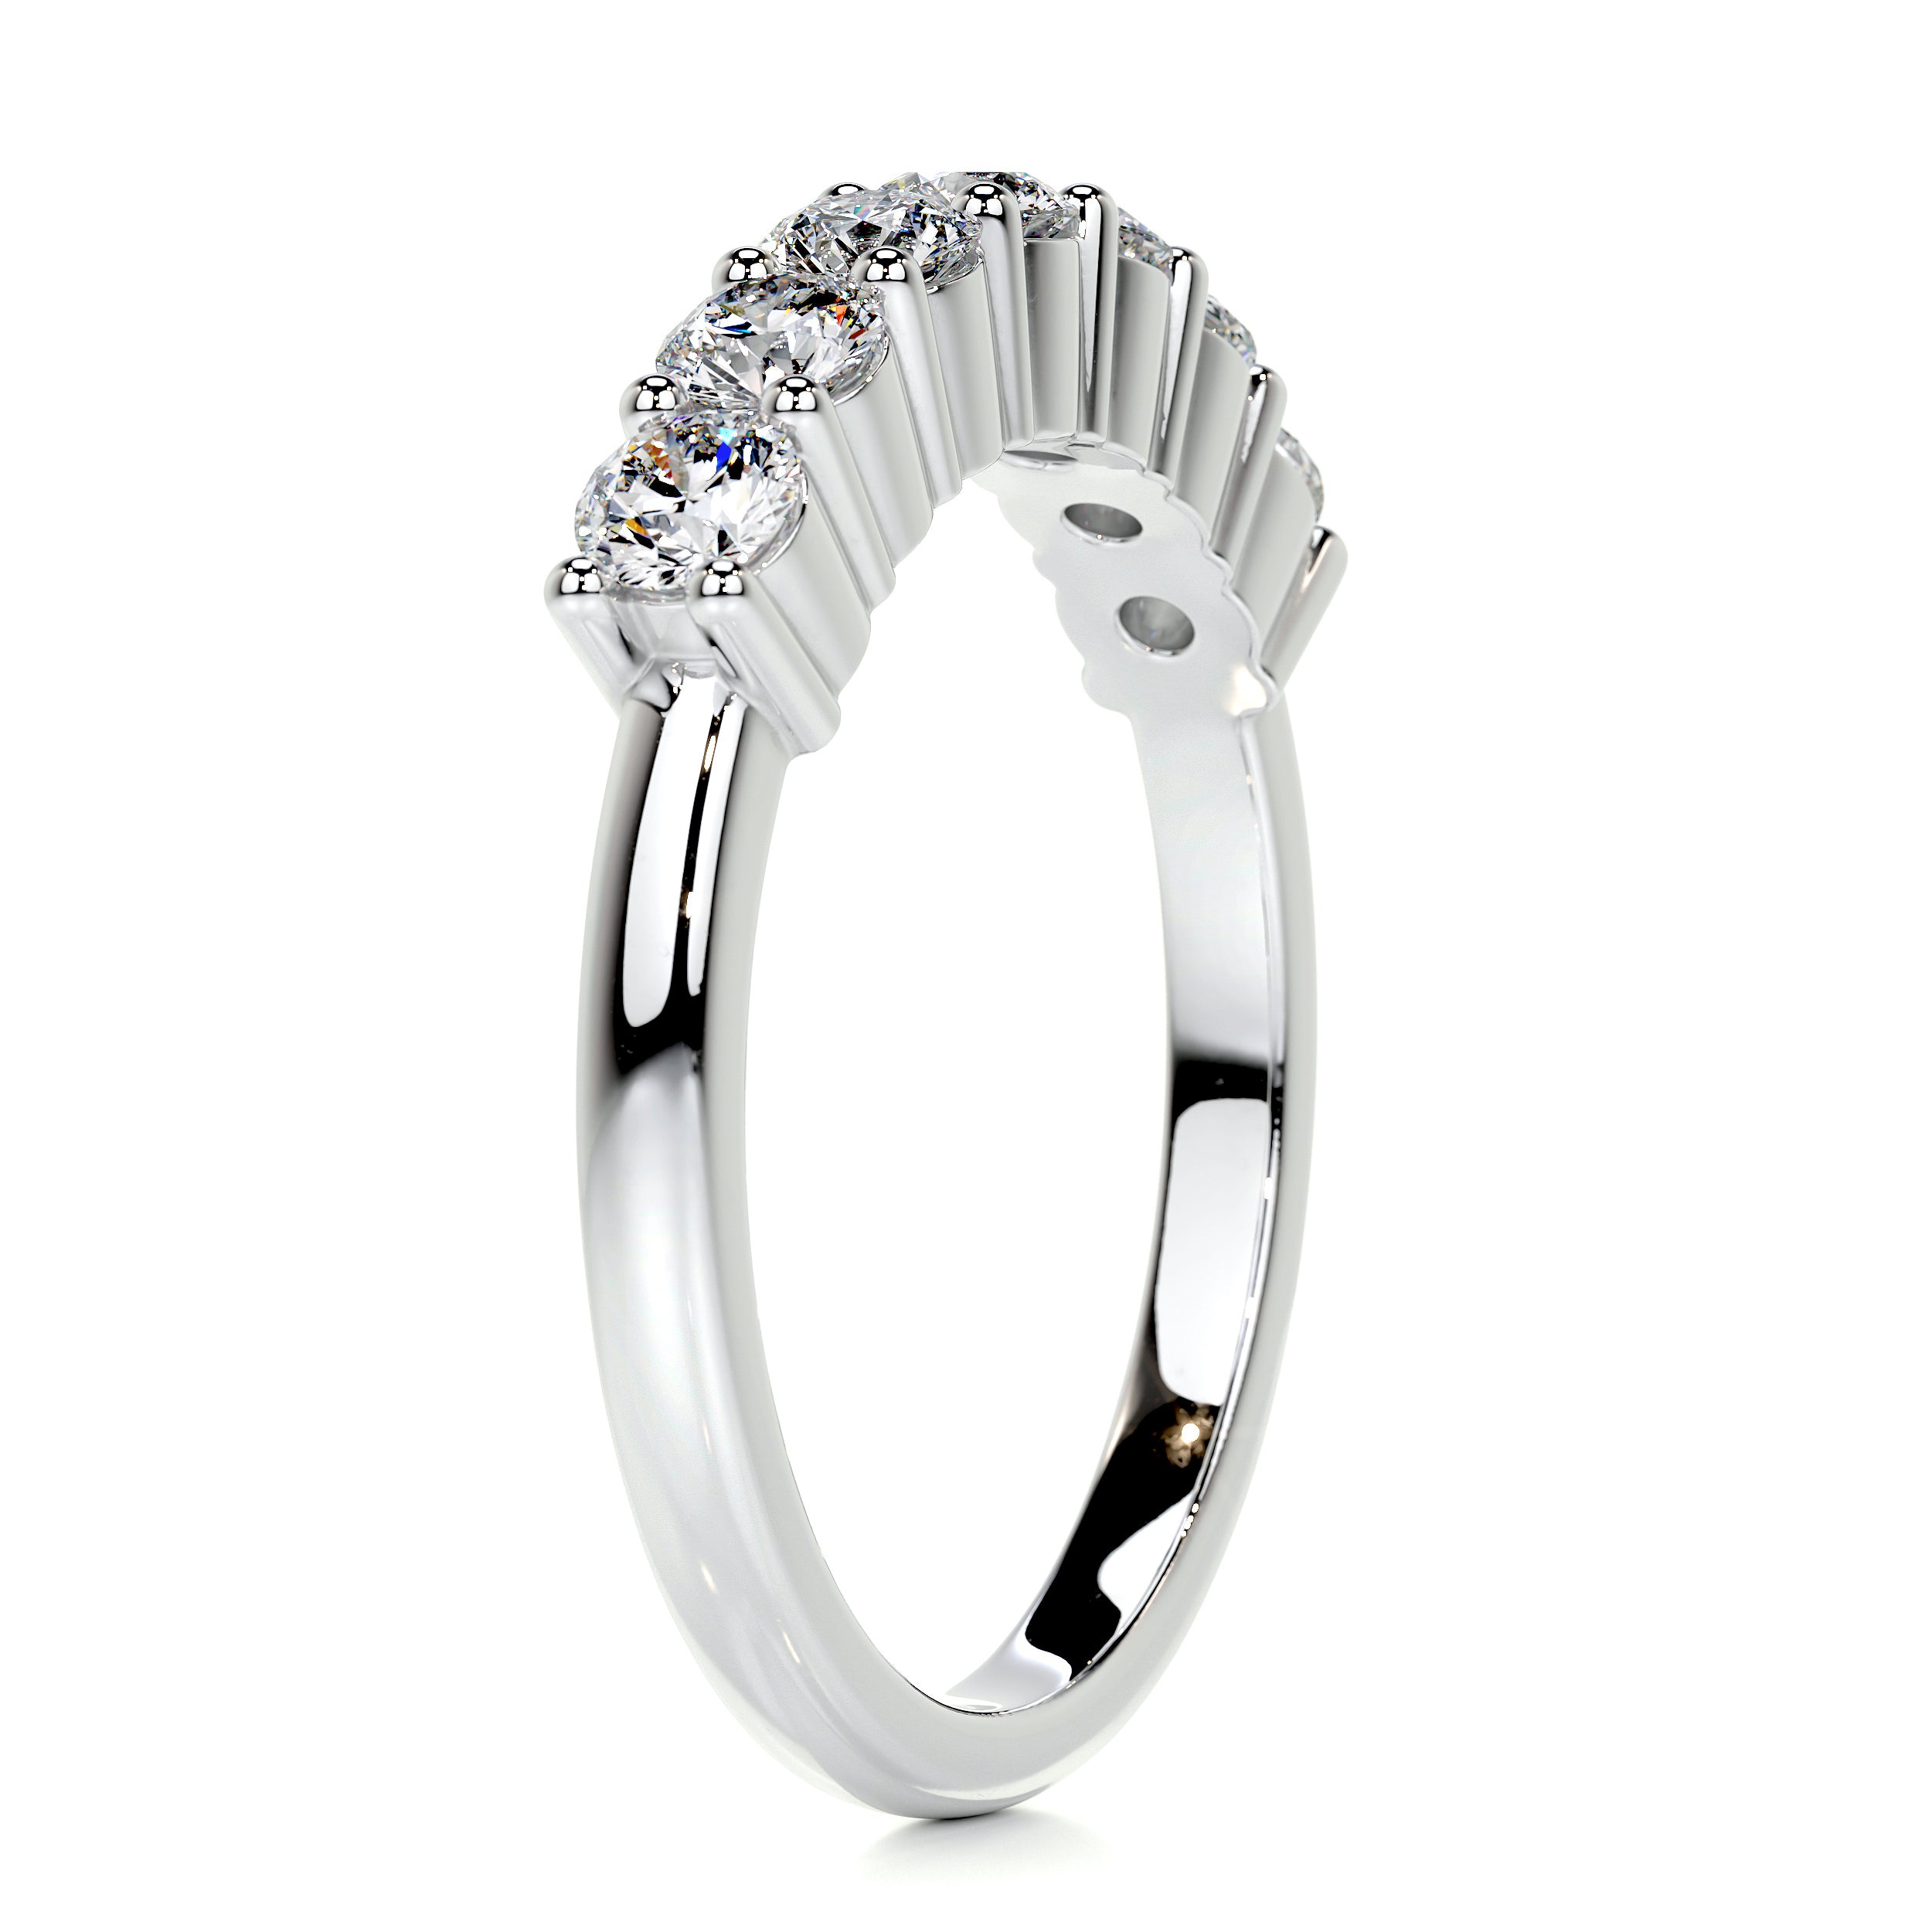 Catherine Diamond Wedding Ring   (0.75 Carat) -18K White Gold